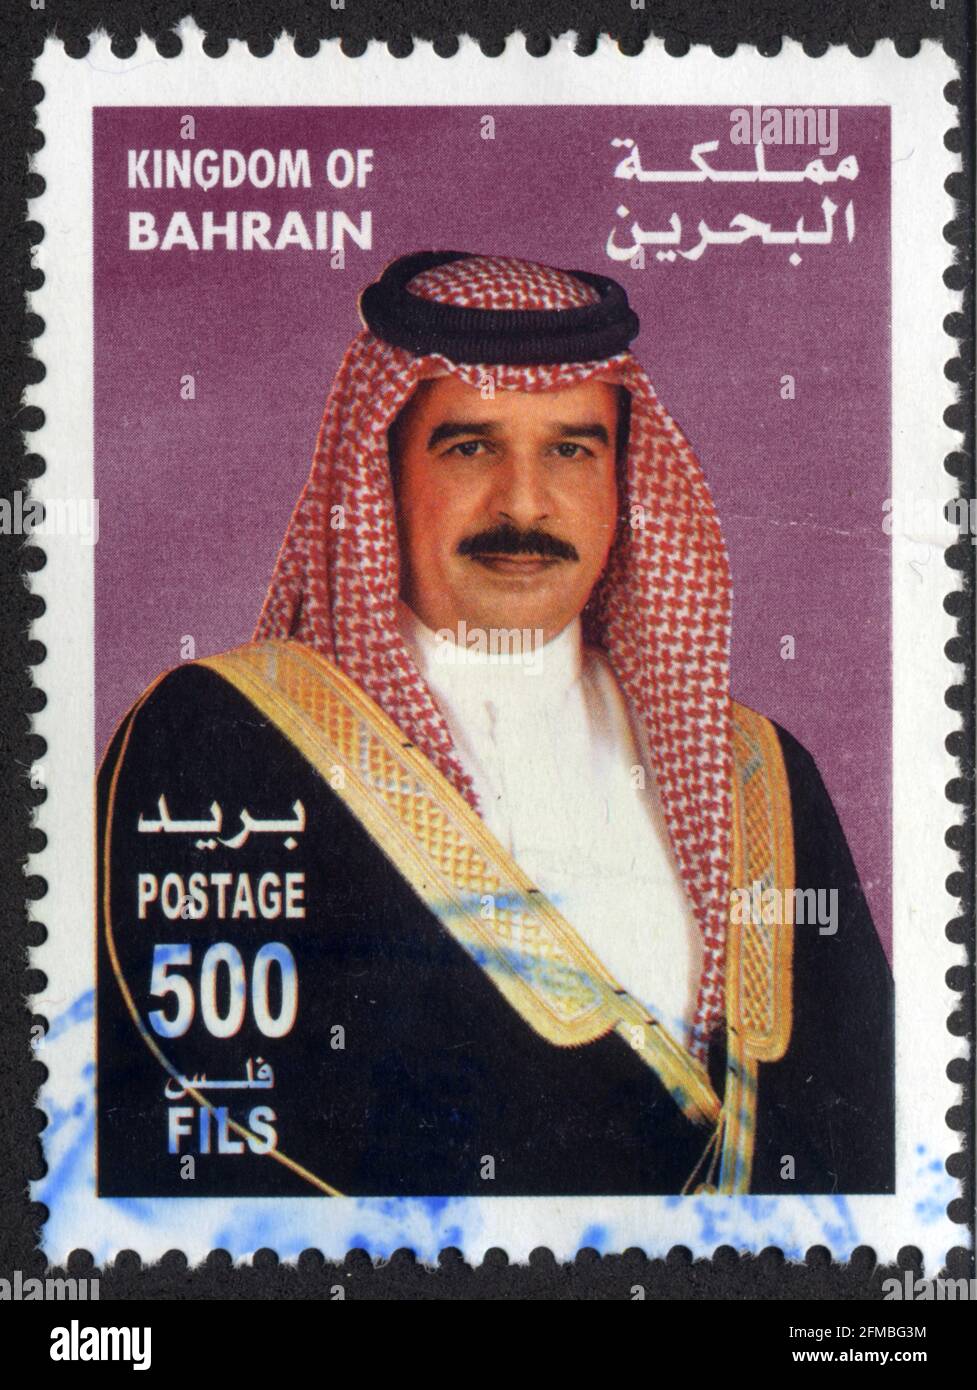 Timbre Kingdom of Bahrain, Postage, 500, fils Stock Photo